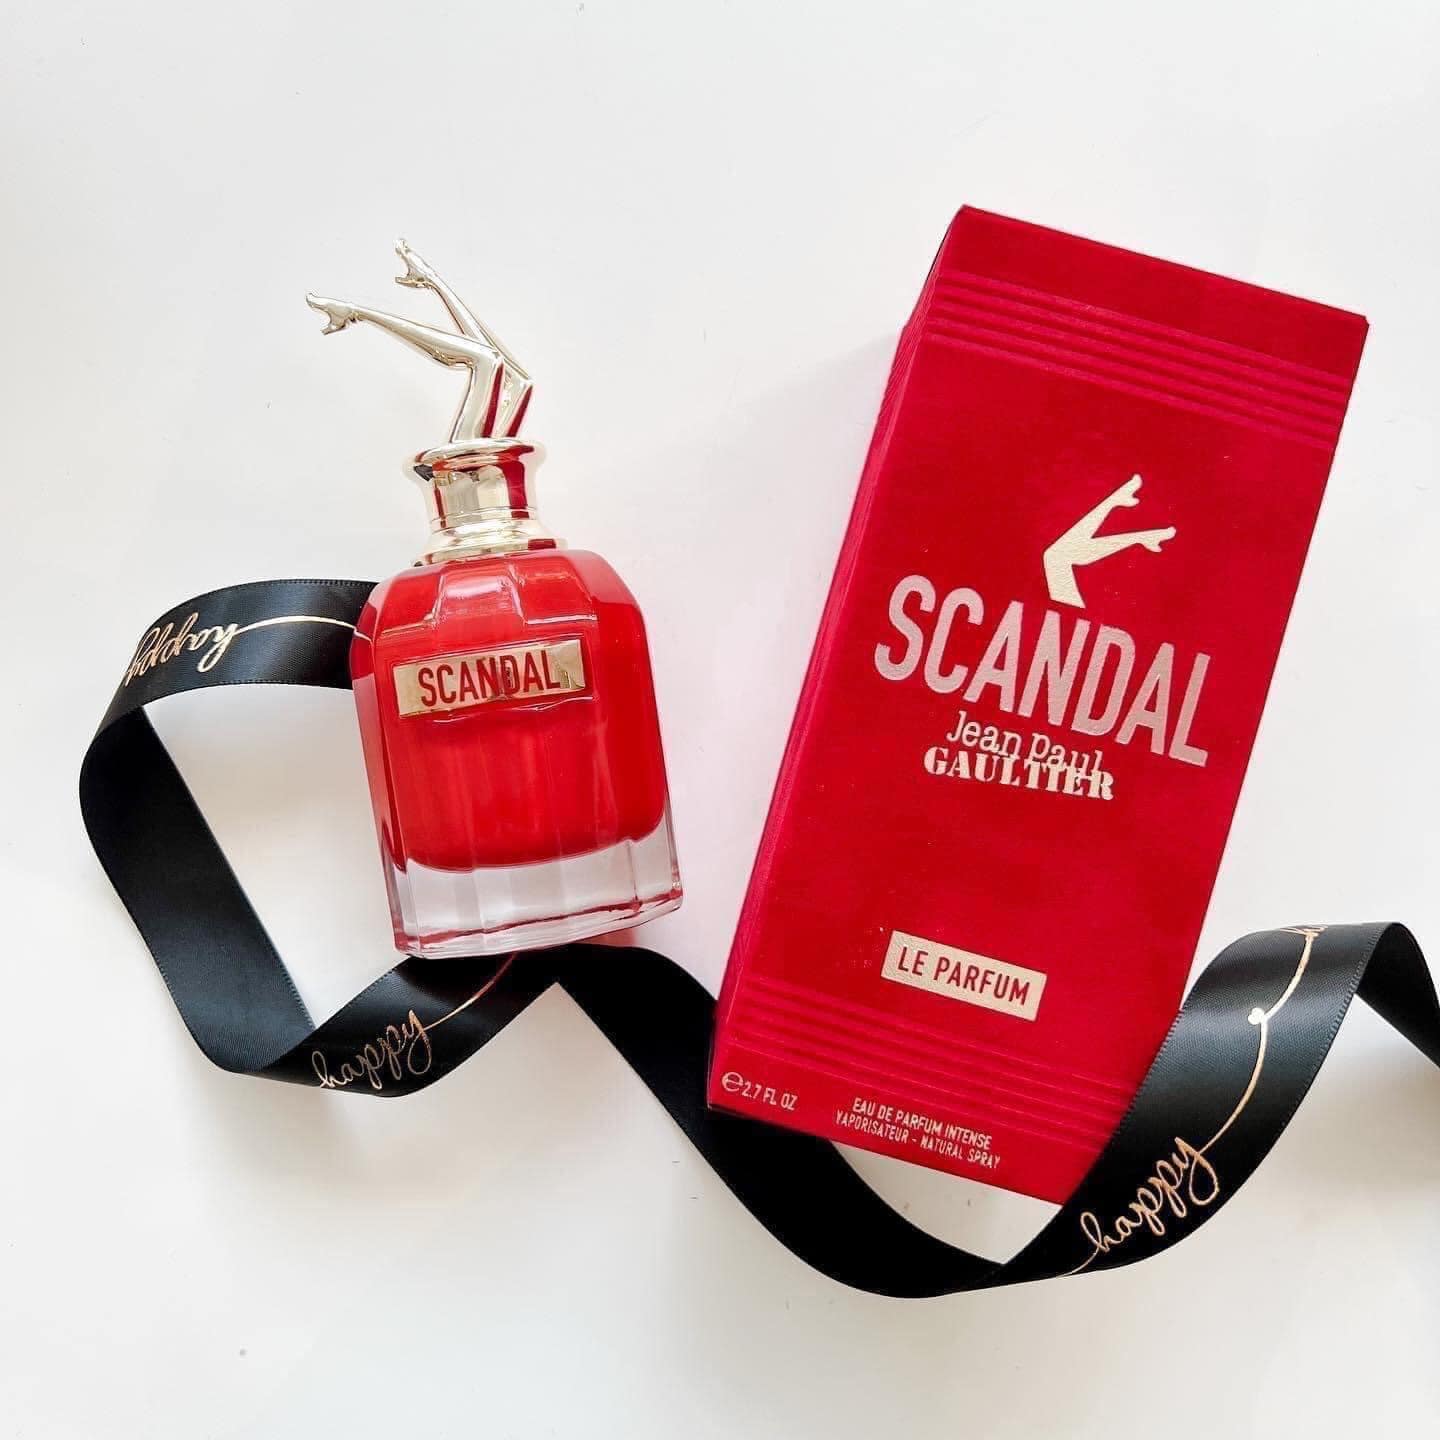 Jean Paul Gaultier Scandal Le Parfum 3 - Nuochoarosa.com - Nước hoa cao cấp, chính hãng giá tốt, mẫu mới